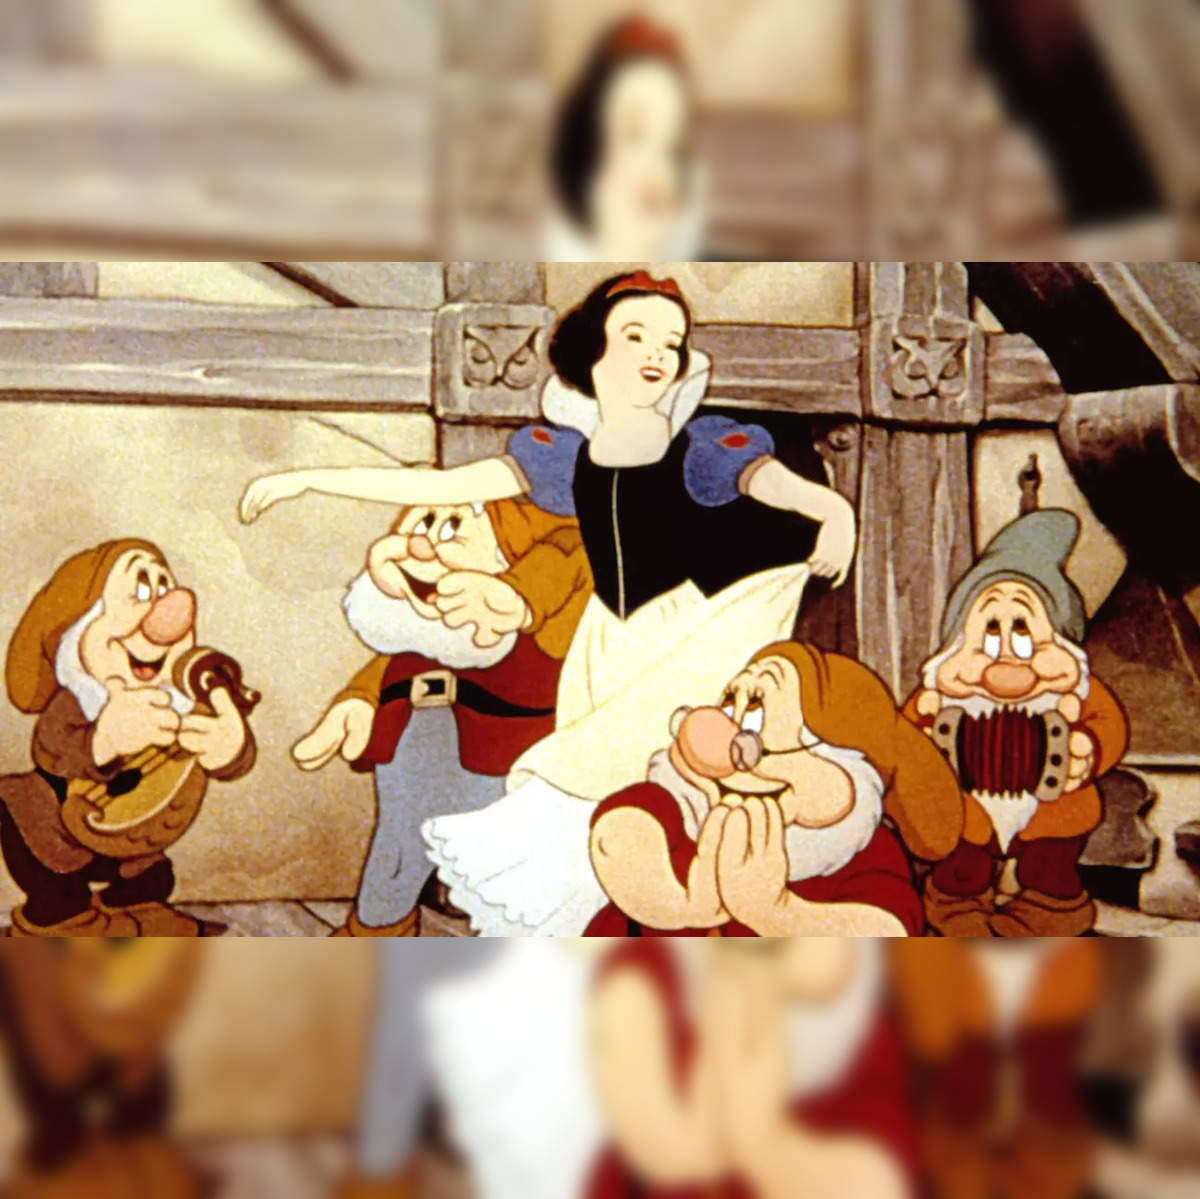 Snow White and The Seven Dwarfs, Full Movie